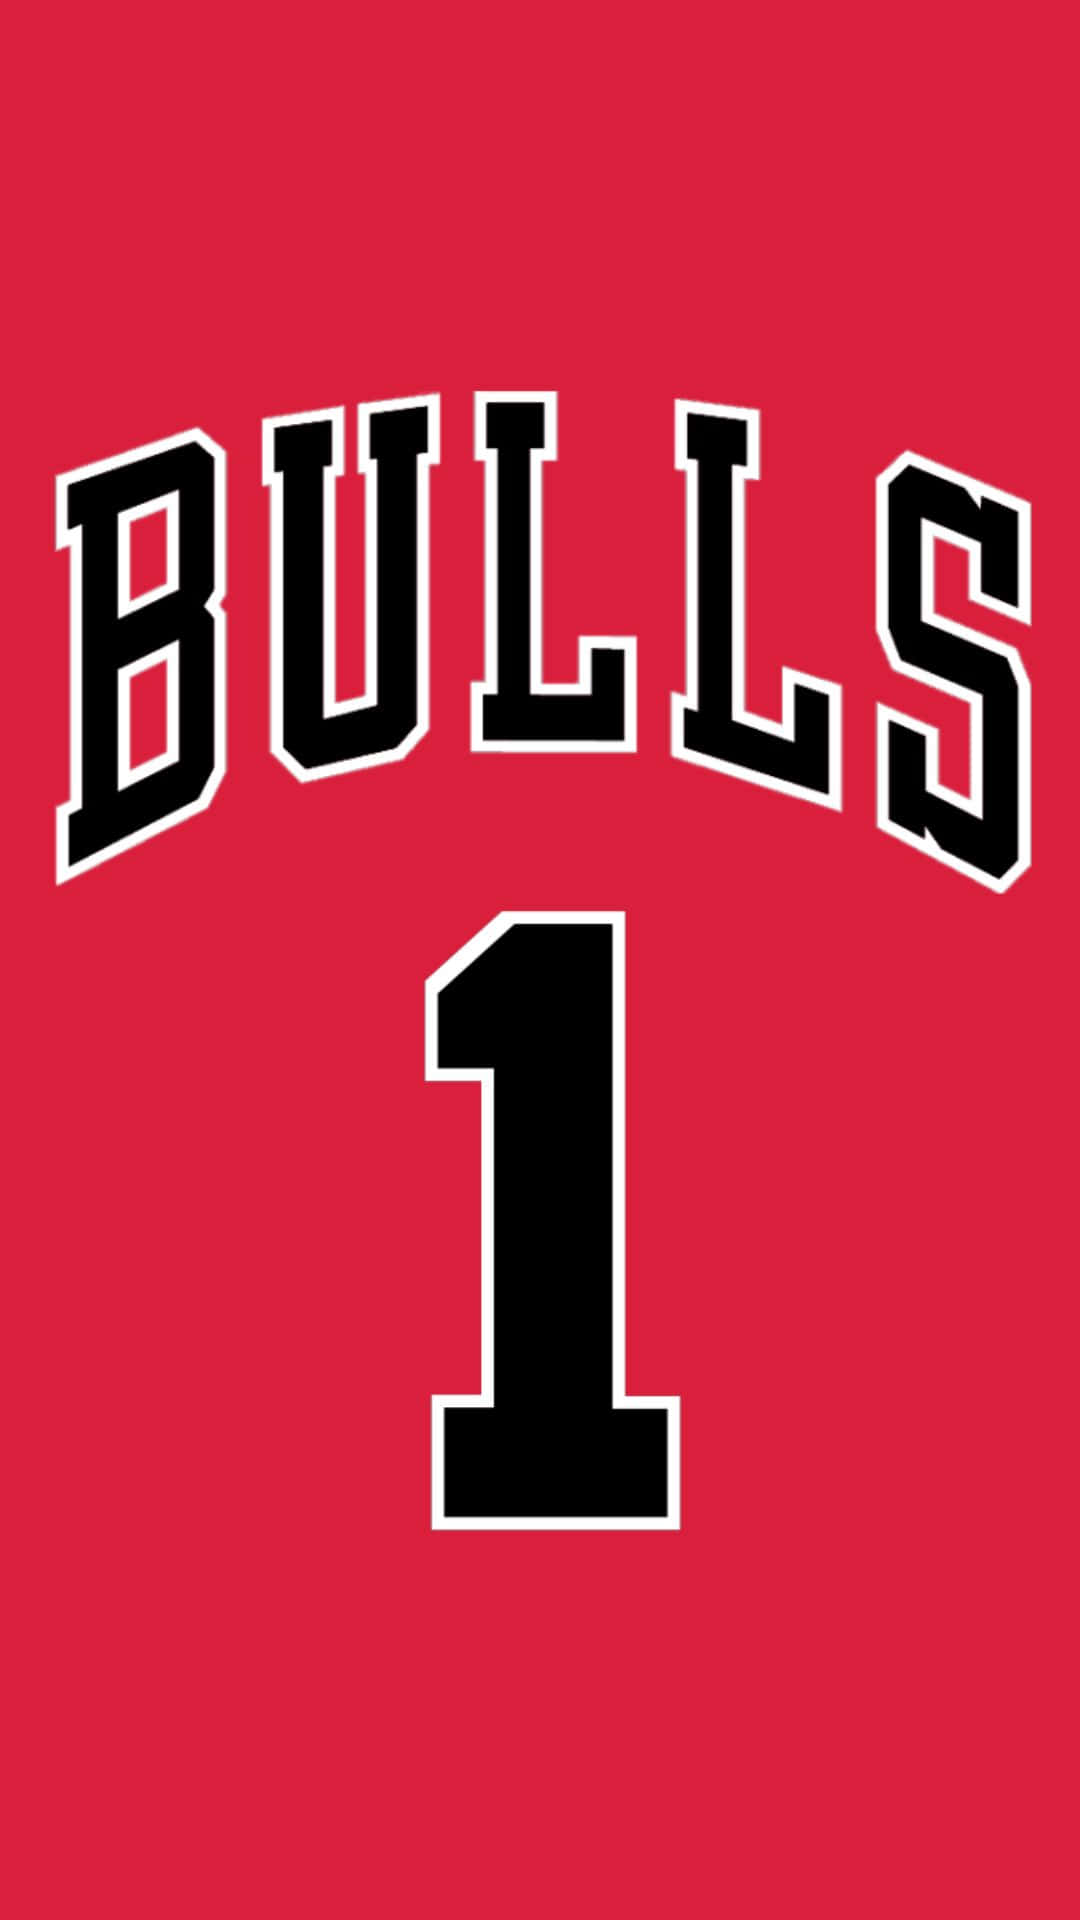 Chicago Bulls Number1 Jersey Wallpaper